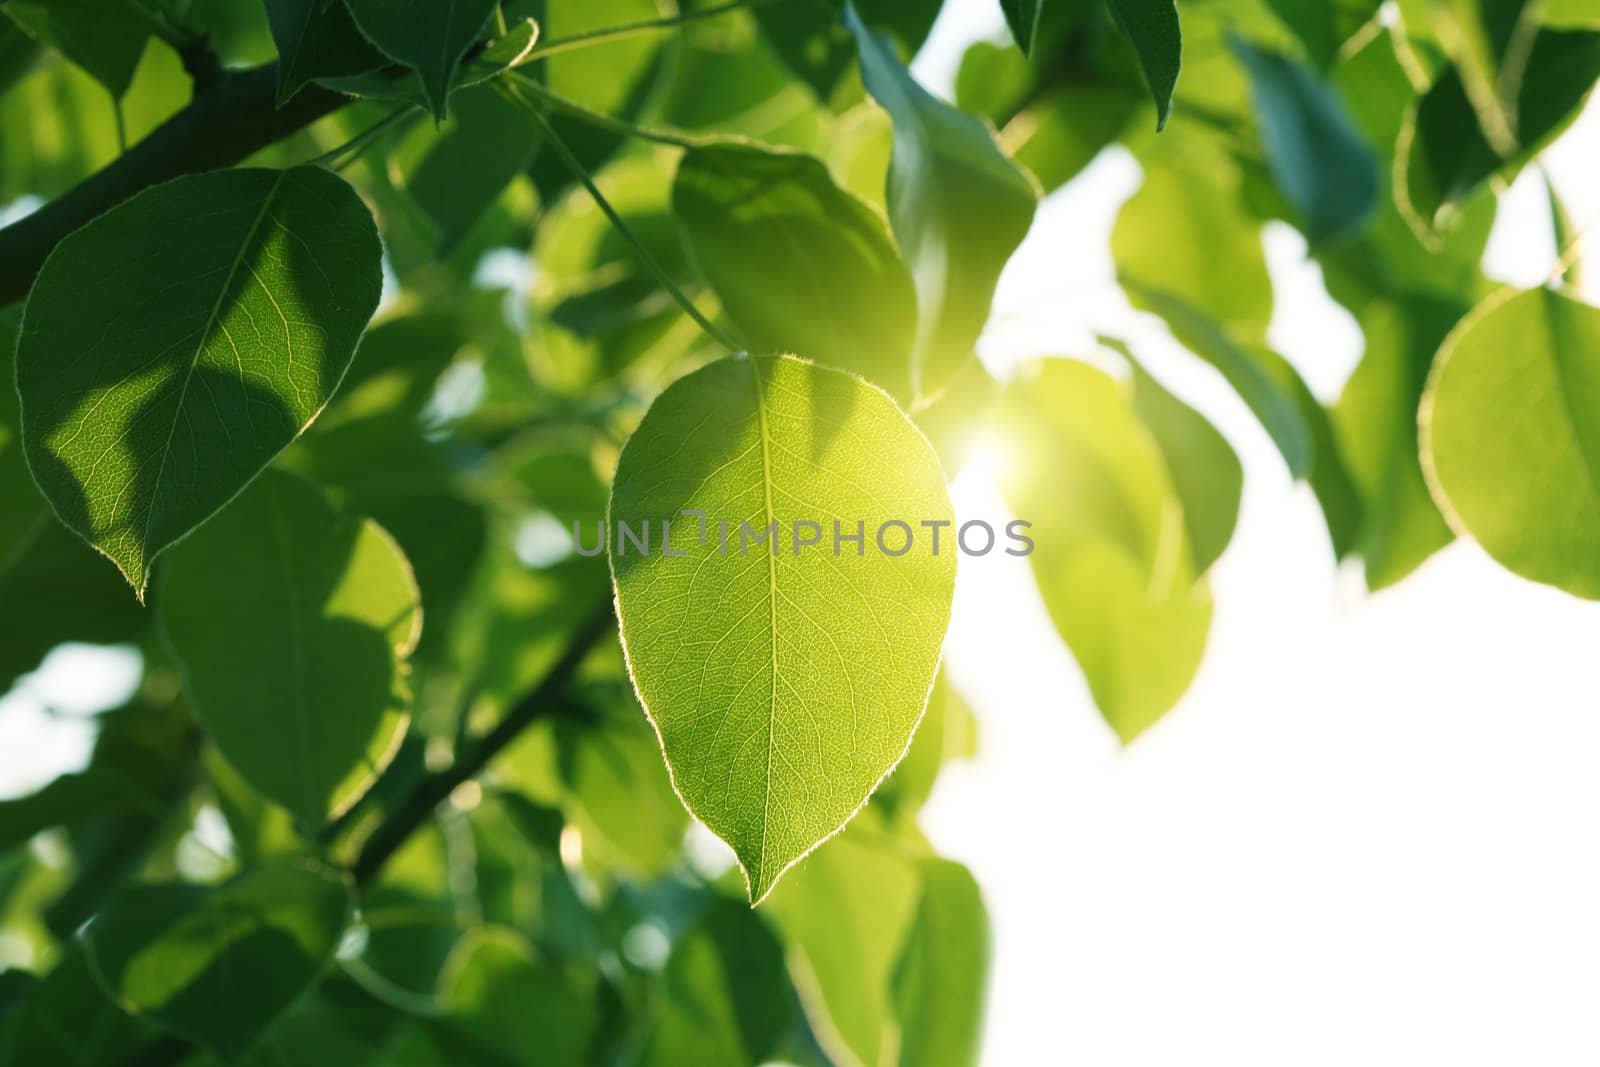 sunlight on green leaves  by rudchenko